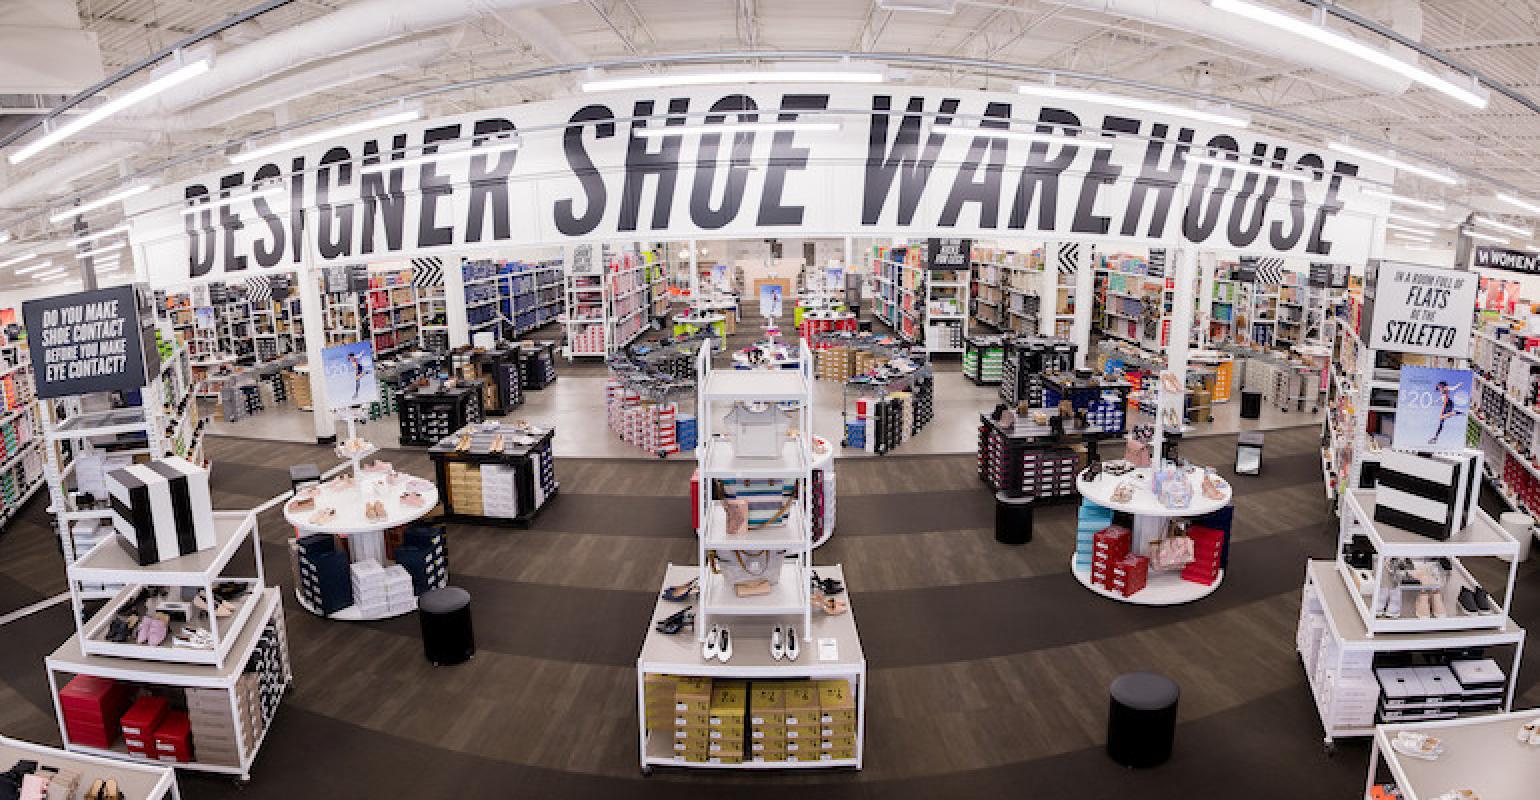 designer shoe warehouse dsw